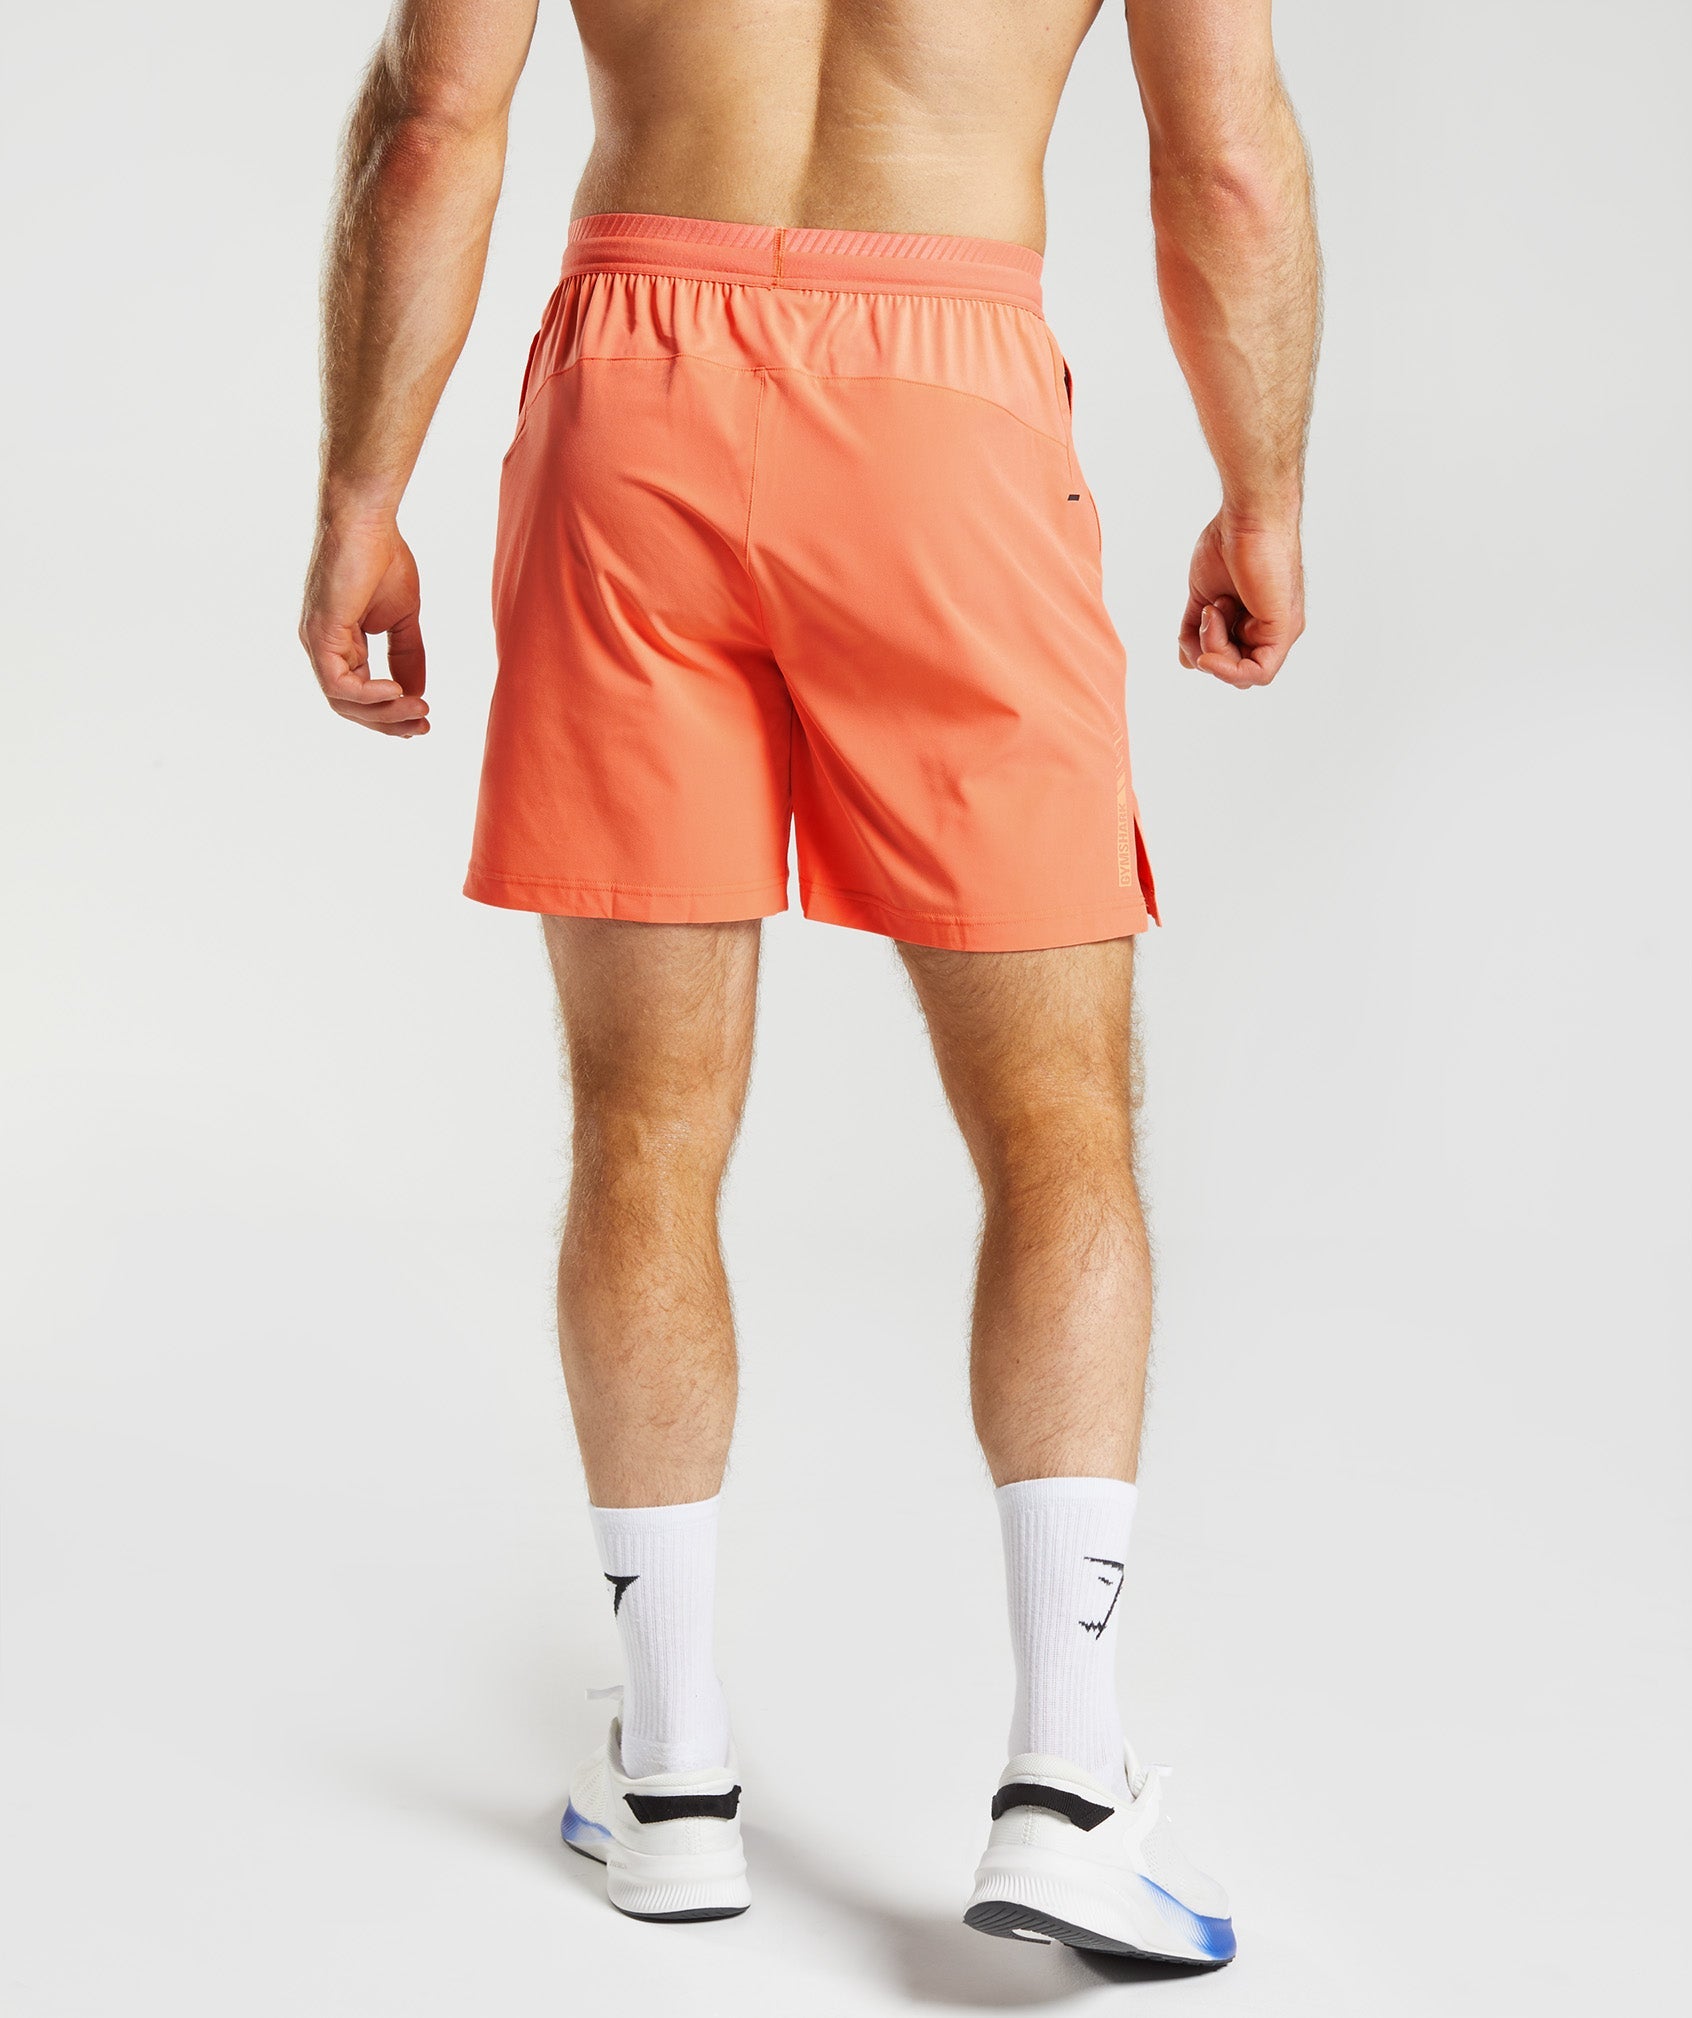 Apex 7" Hybrid Shorts in Solstice Orange - view 2